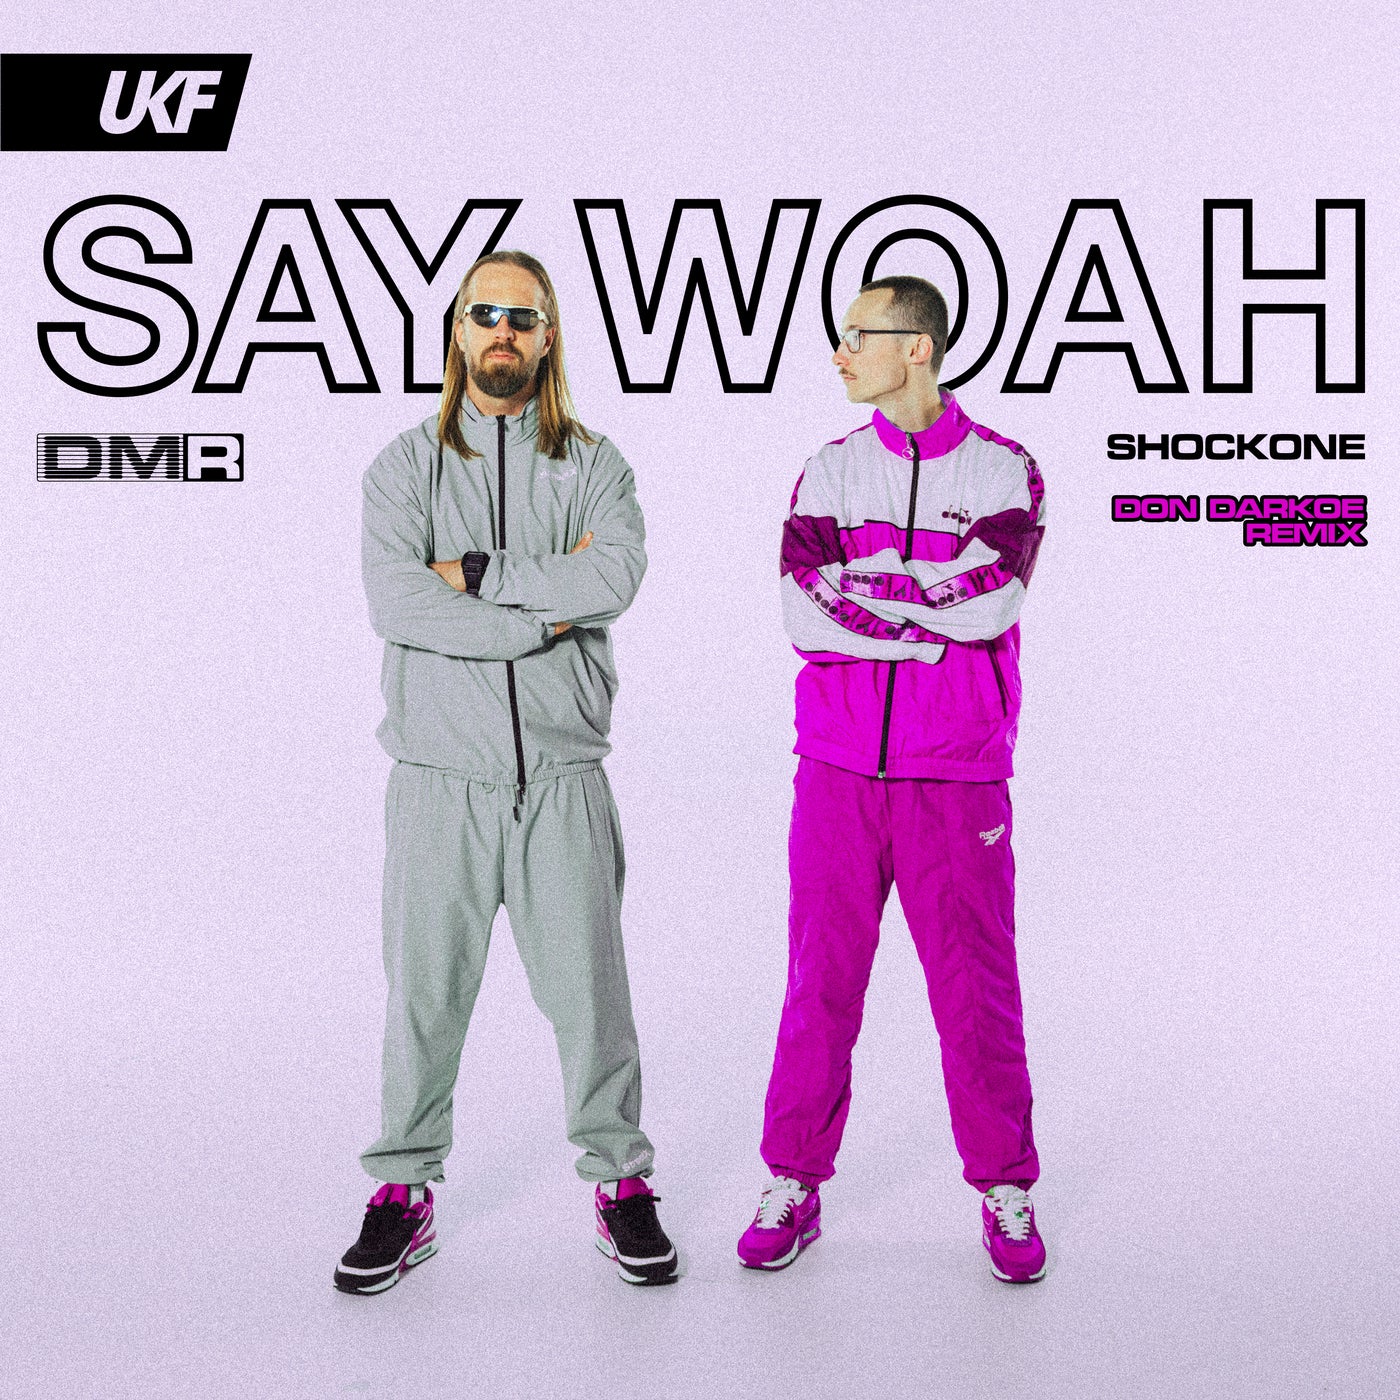 Say Woah - DON DARKOE Remix